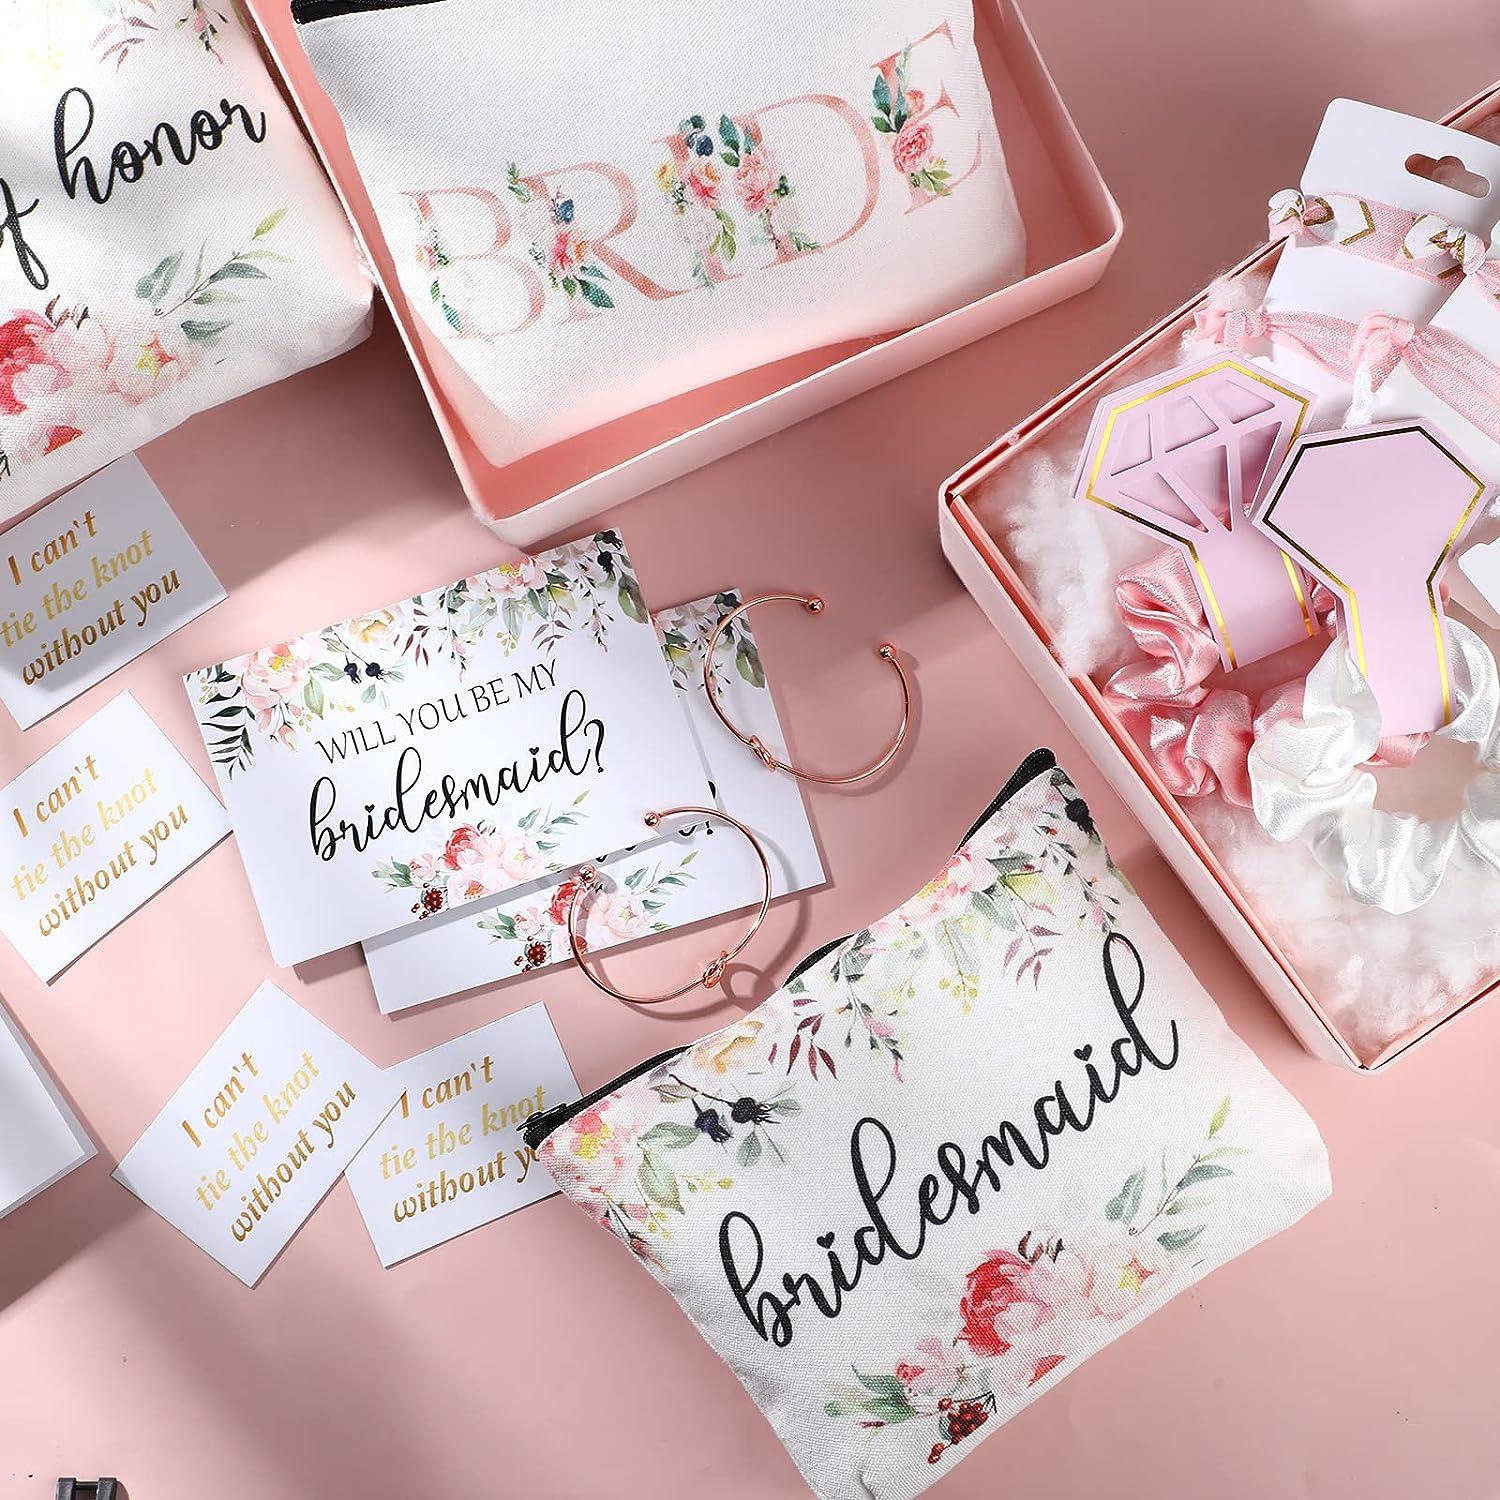 15 Awesome Bridal Shower Gift Ideas that She'll Absolutely Adore -  Elegantweddinginvites.com Blog